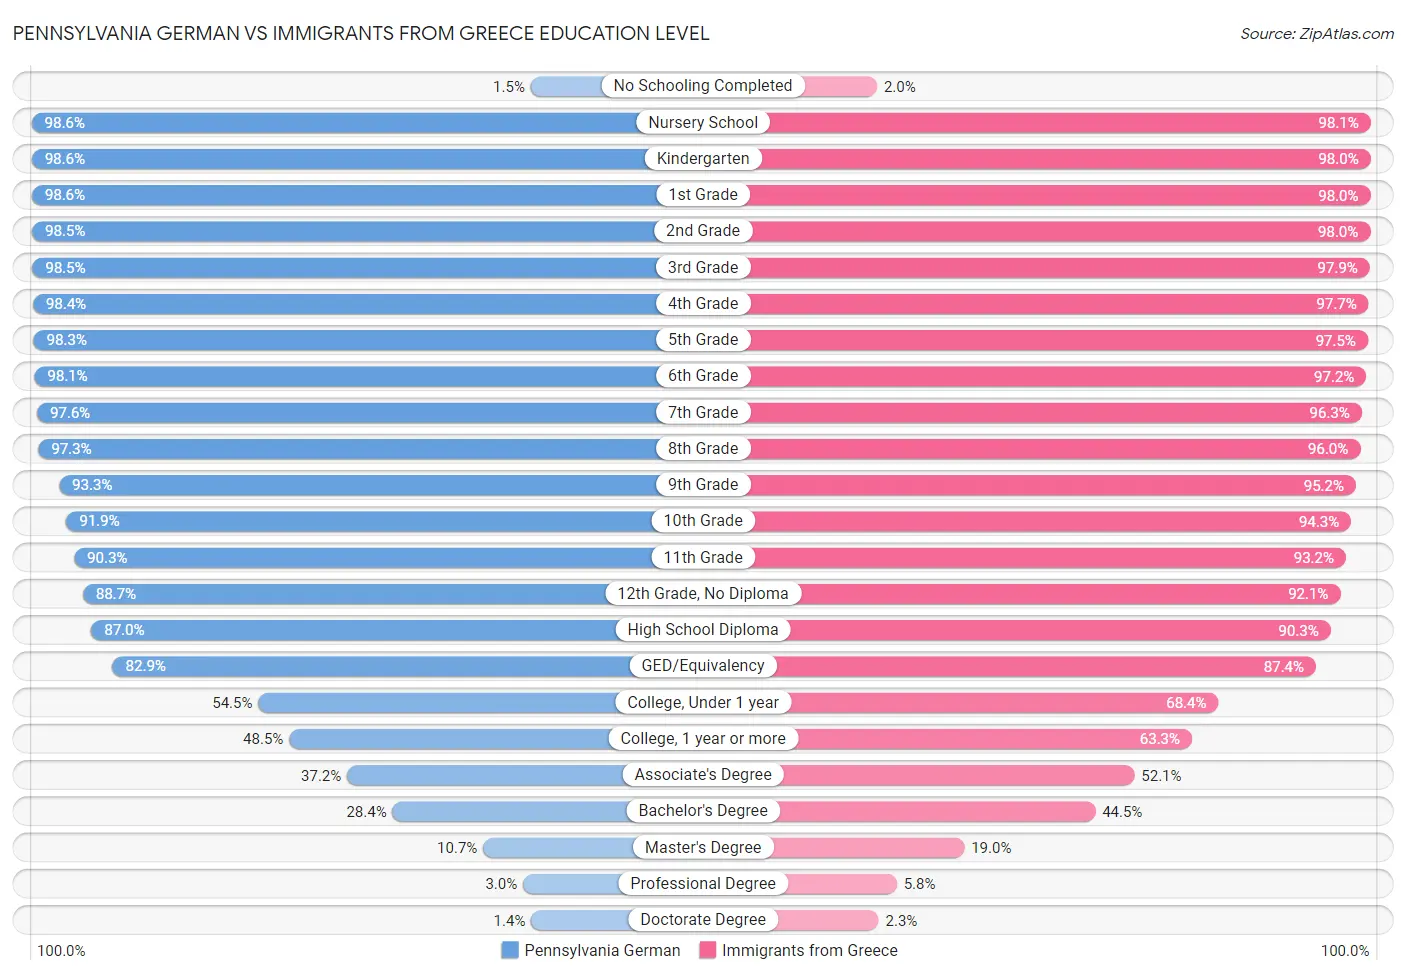 Pennsylvania German vs Immigrants from Greece Education Level